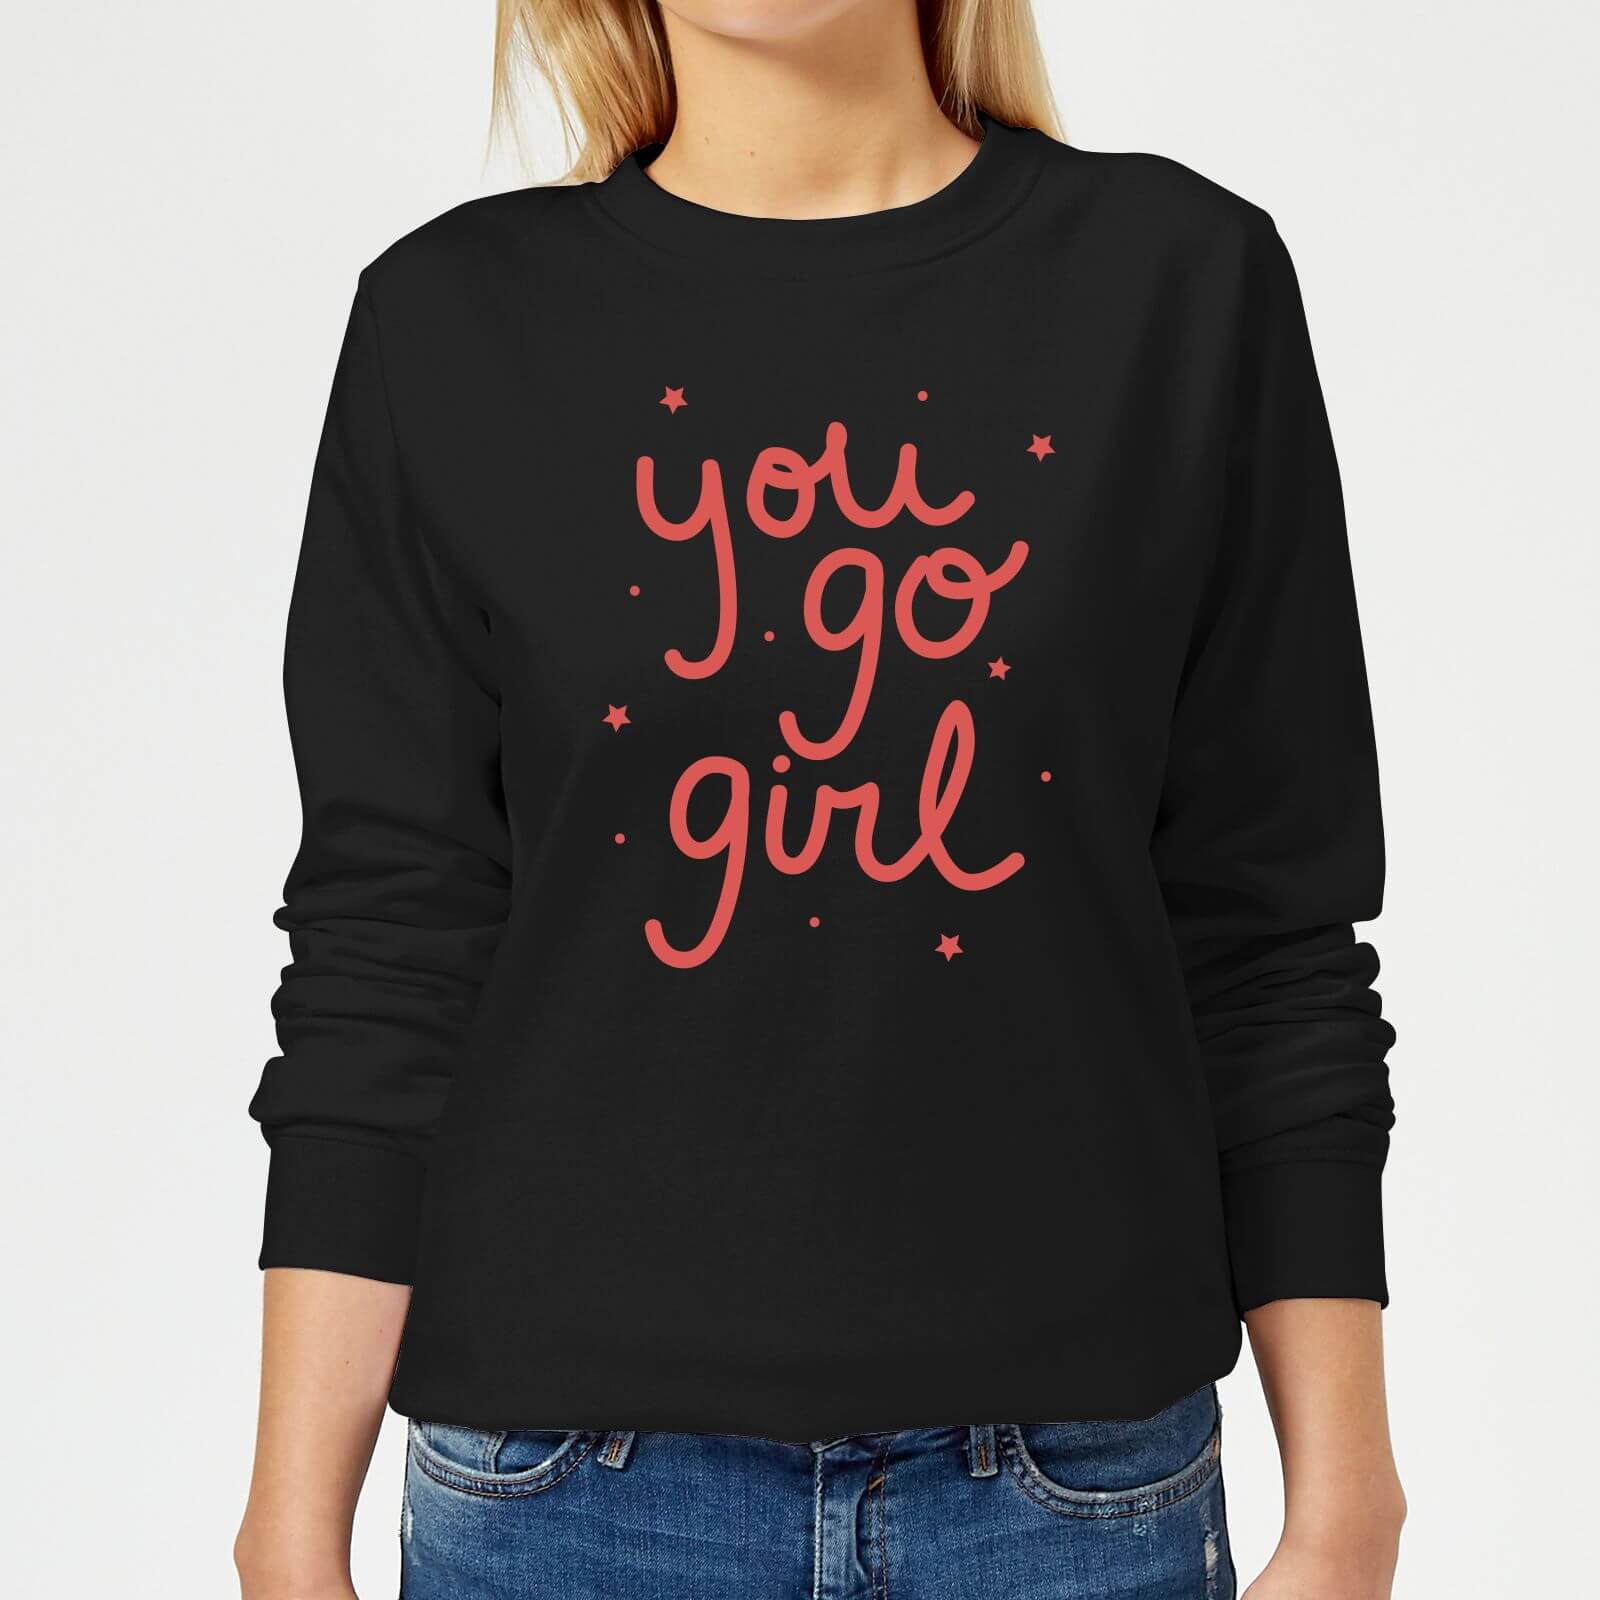 You Go Girl Women's Sweatshirt - Black - M - Black